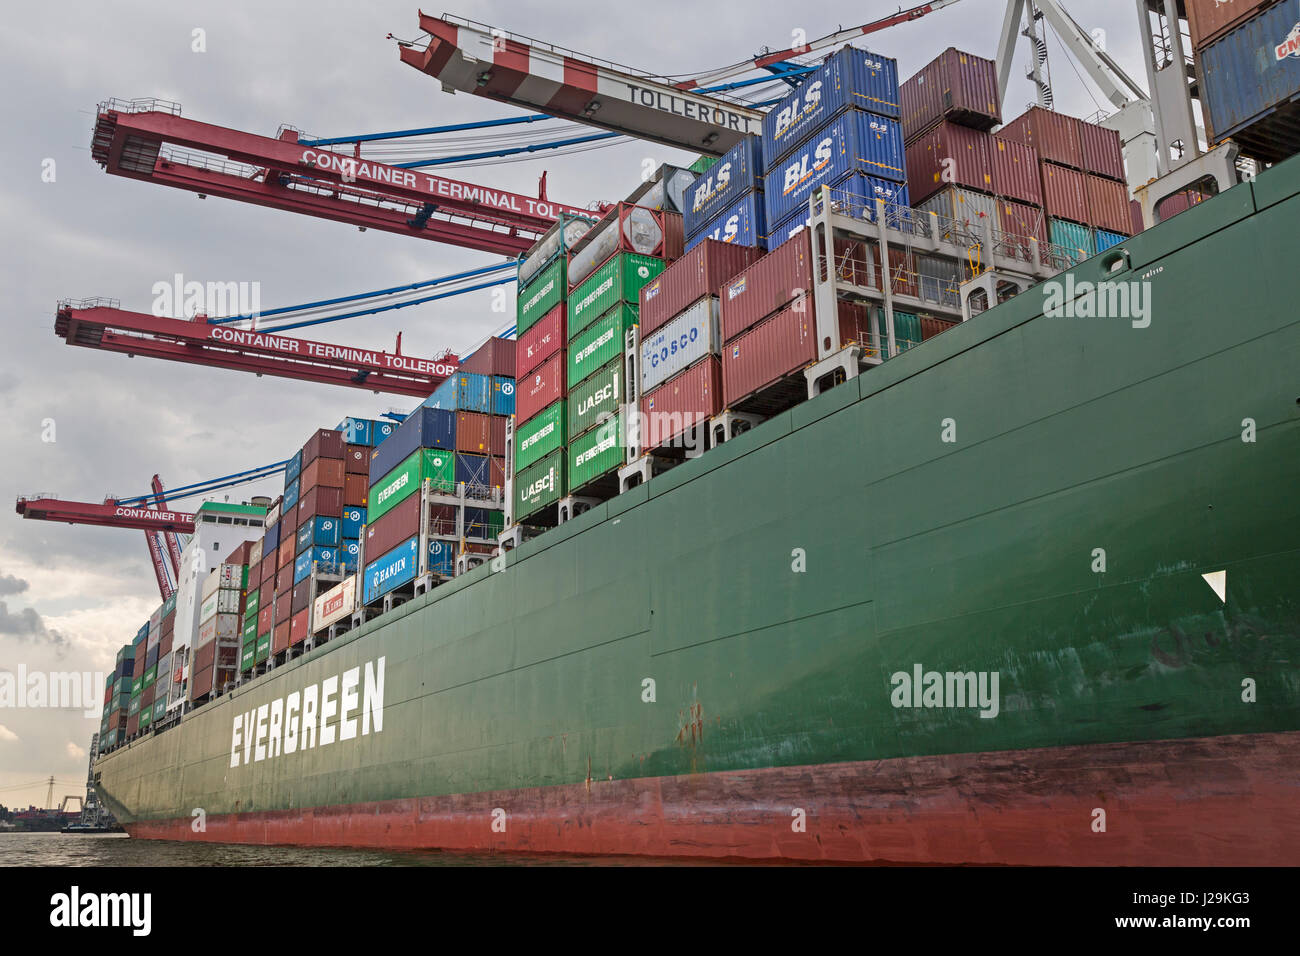 Container ship Ever Lyric, Hamburg harbor, containerterminal Tollerort, Hamburg, Germany, Europe Stock Photo